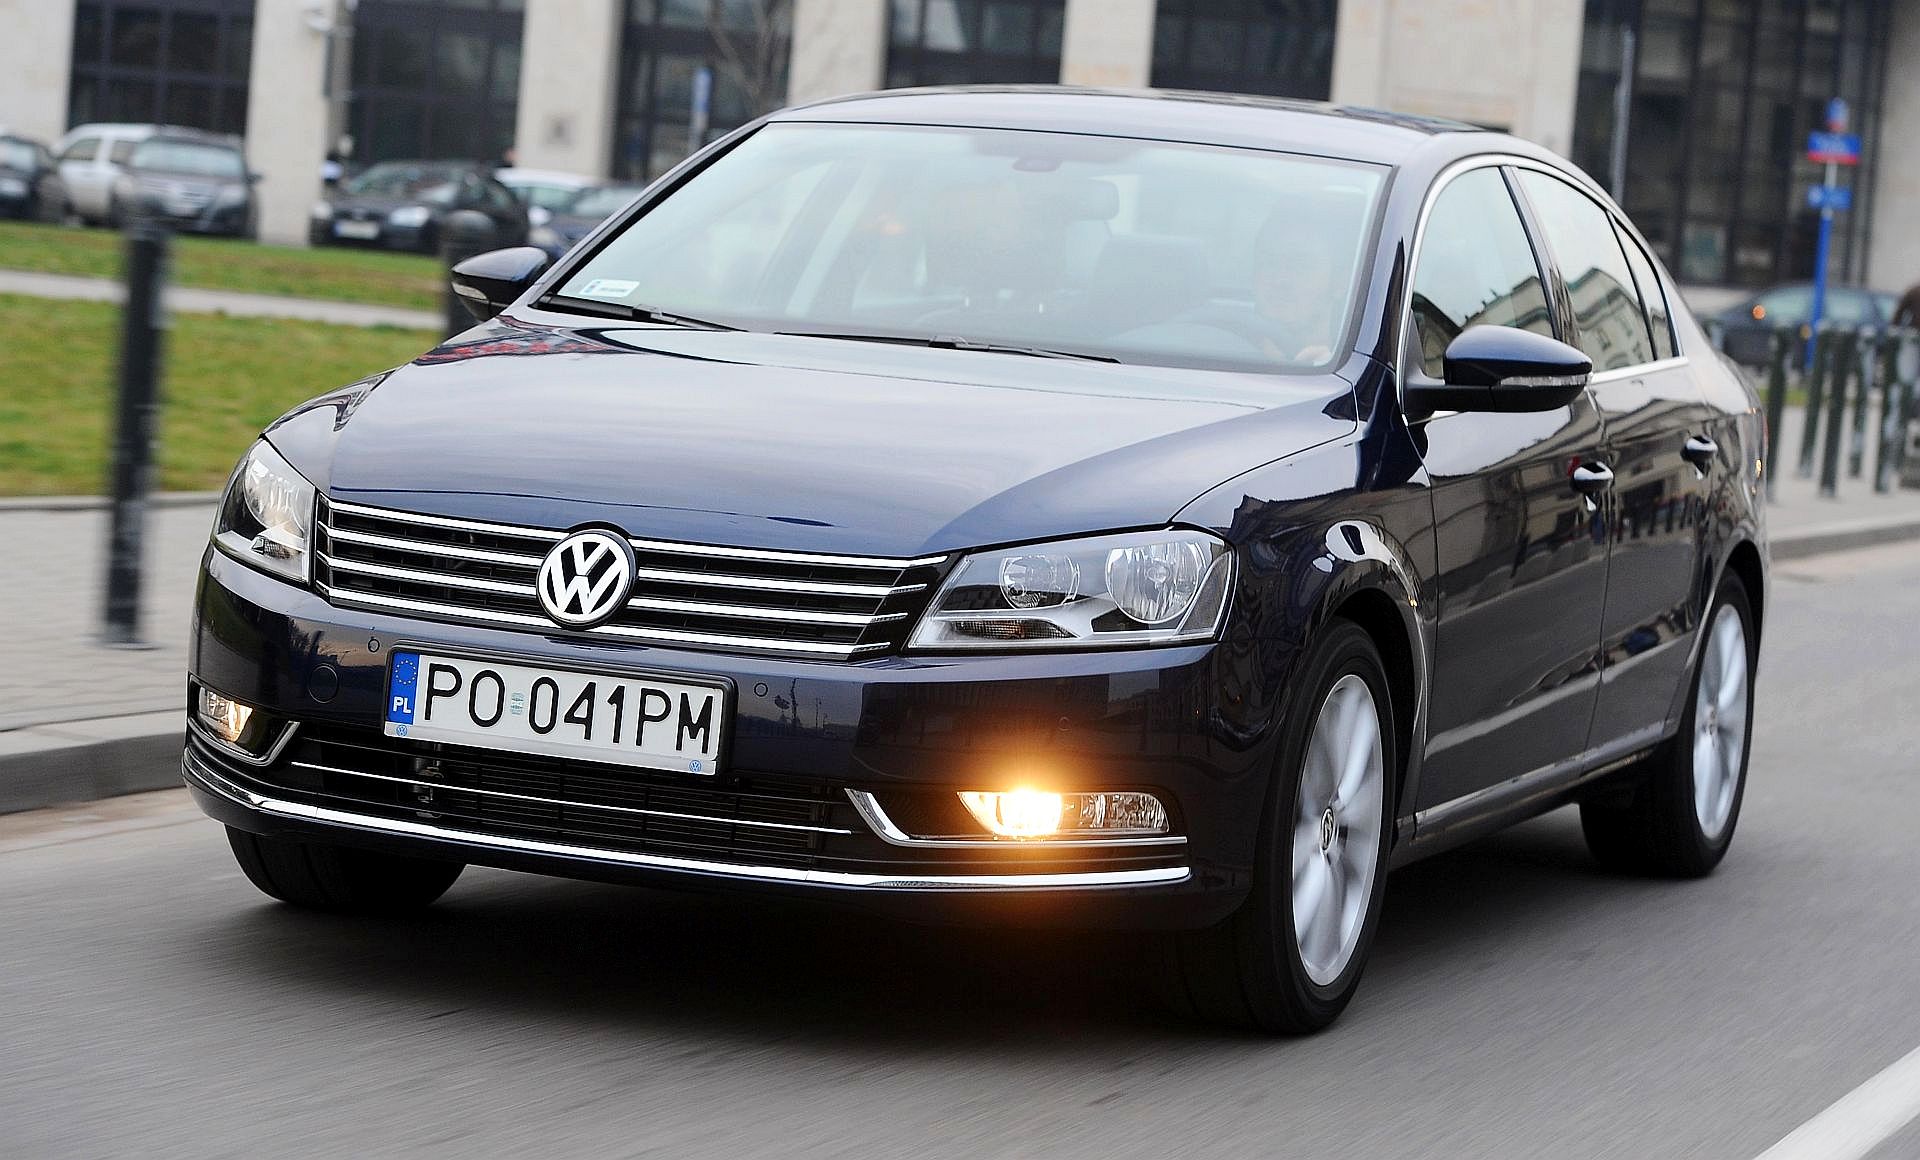 Używany Volkswagen Passat B7 (2010-2014) - opinie, dane techniczne